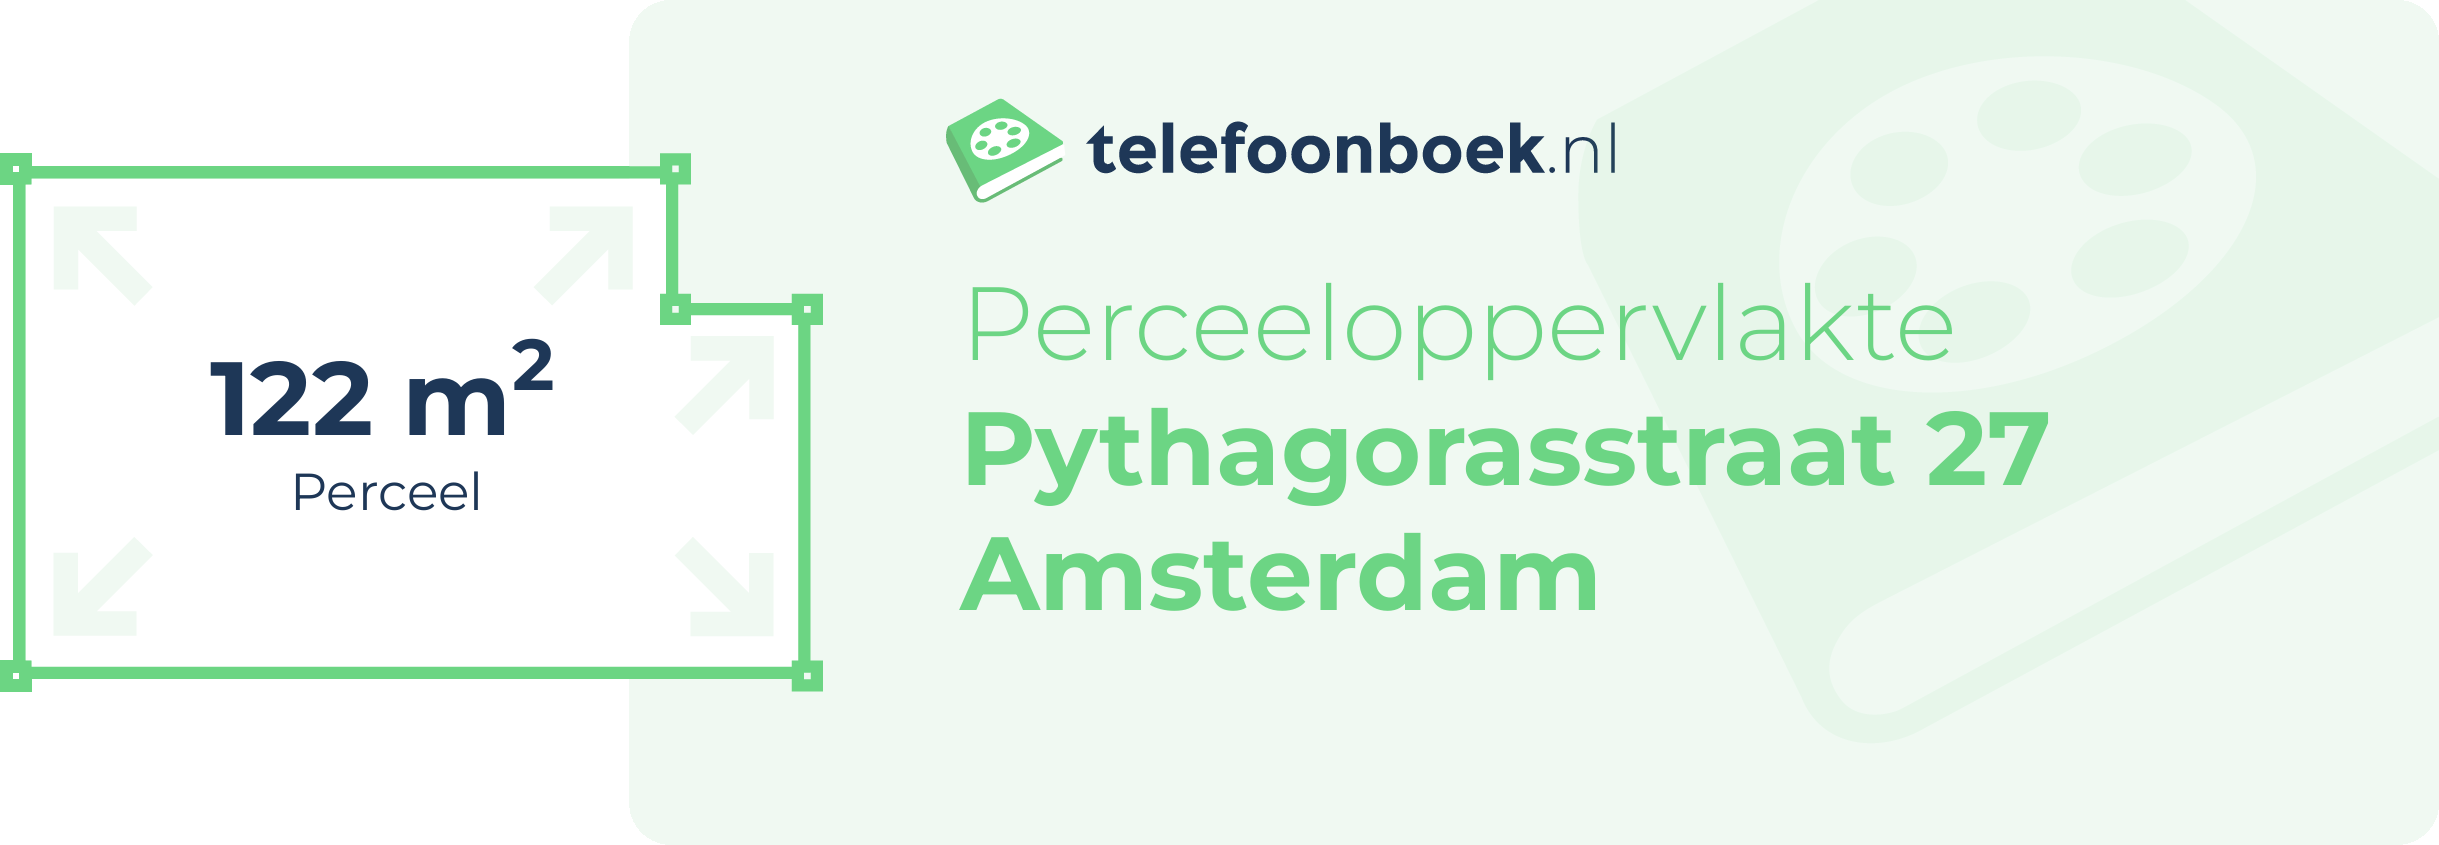 Perceeloppervlakte Pythagorasstraat 27 Amsterdam